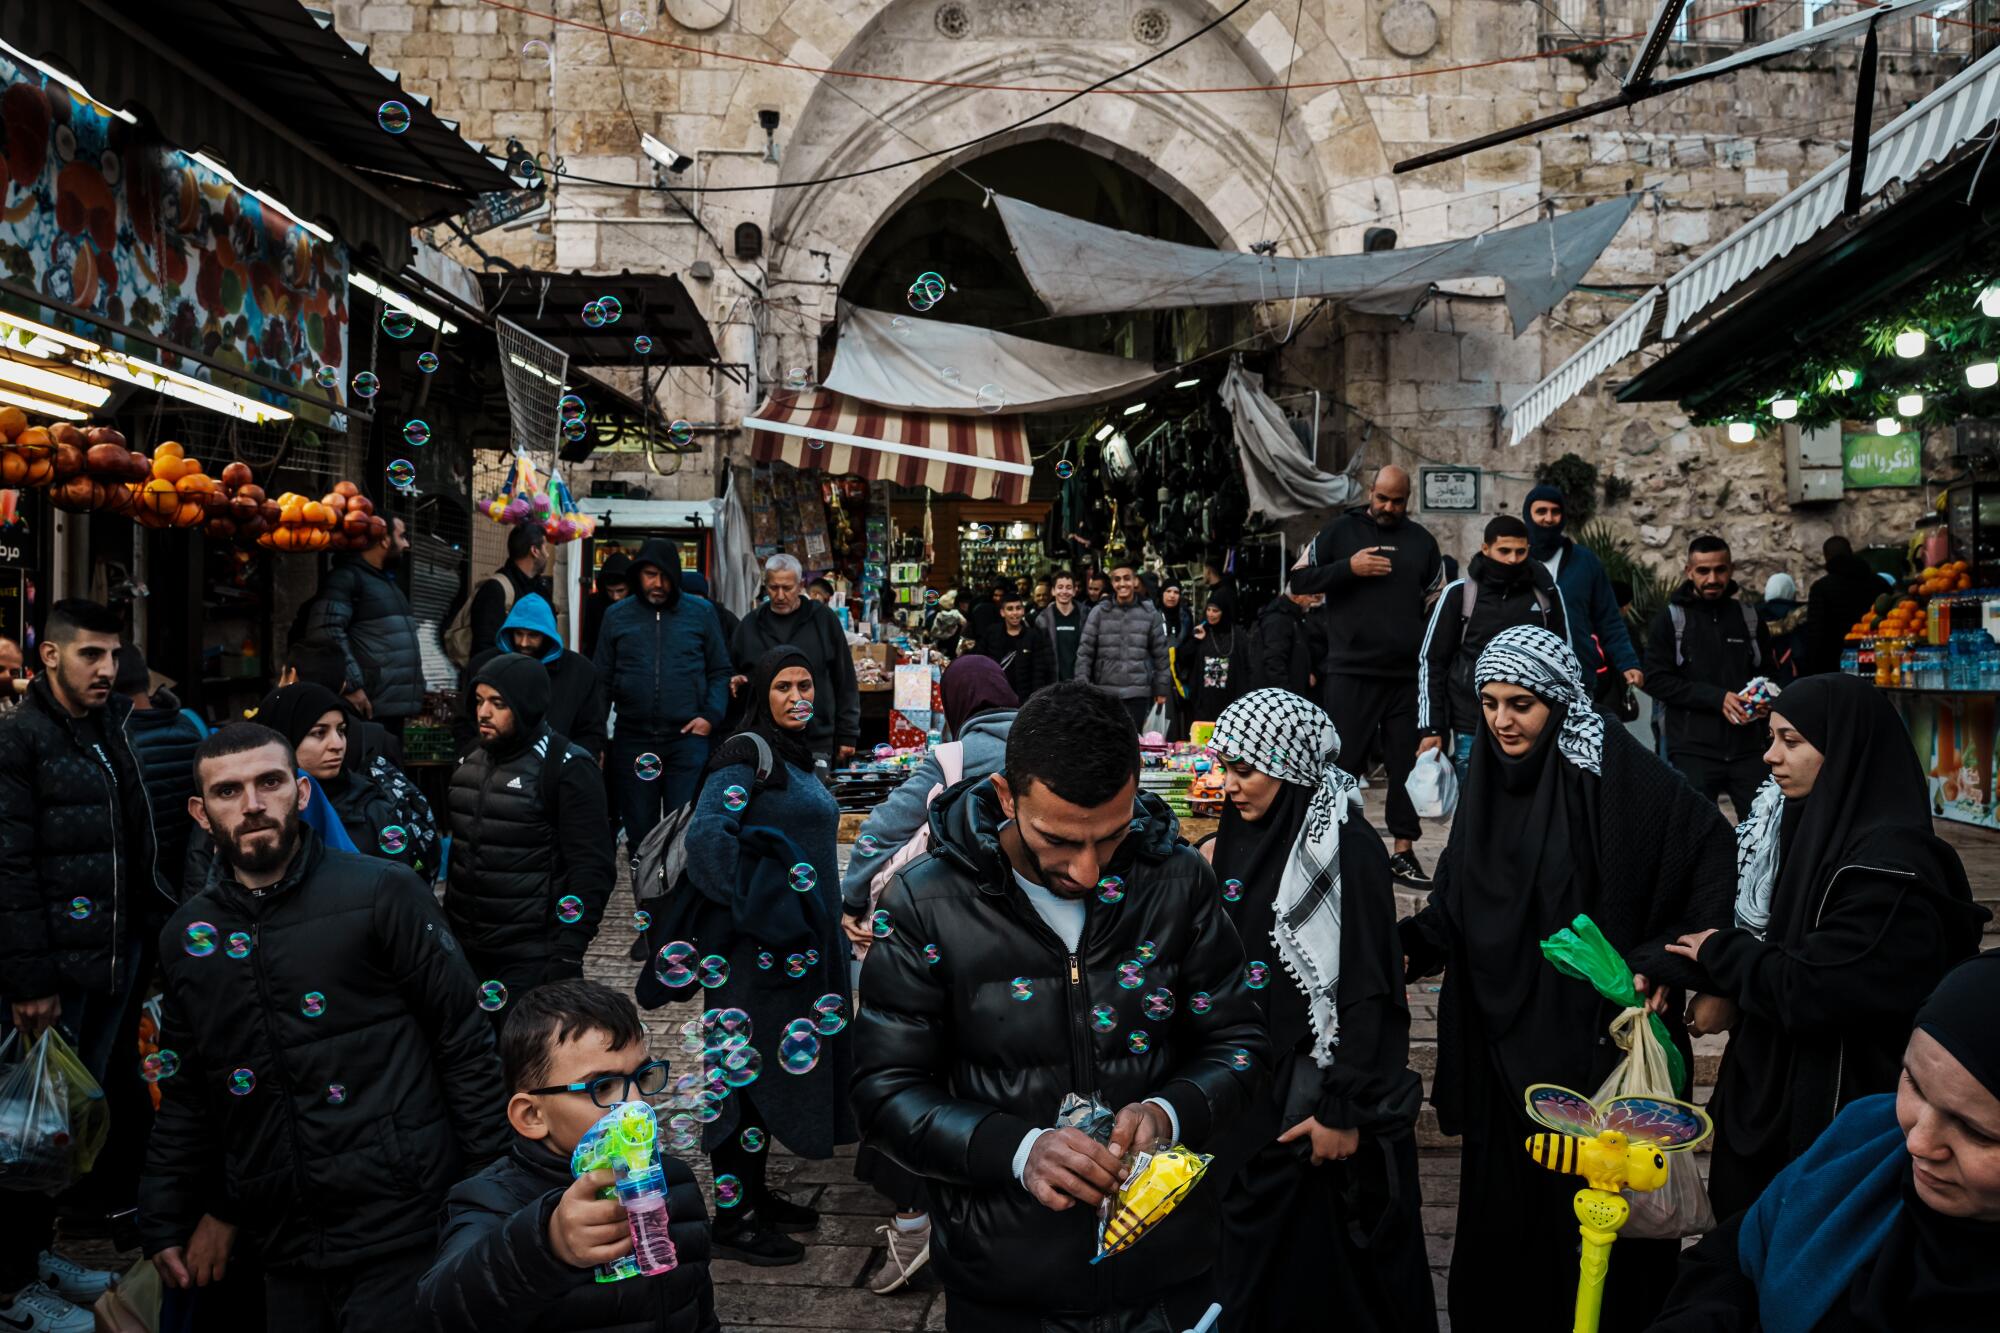 Devout Muslims enter the Old City of Jerusalem through Damascus Gate.